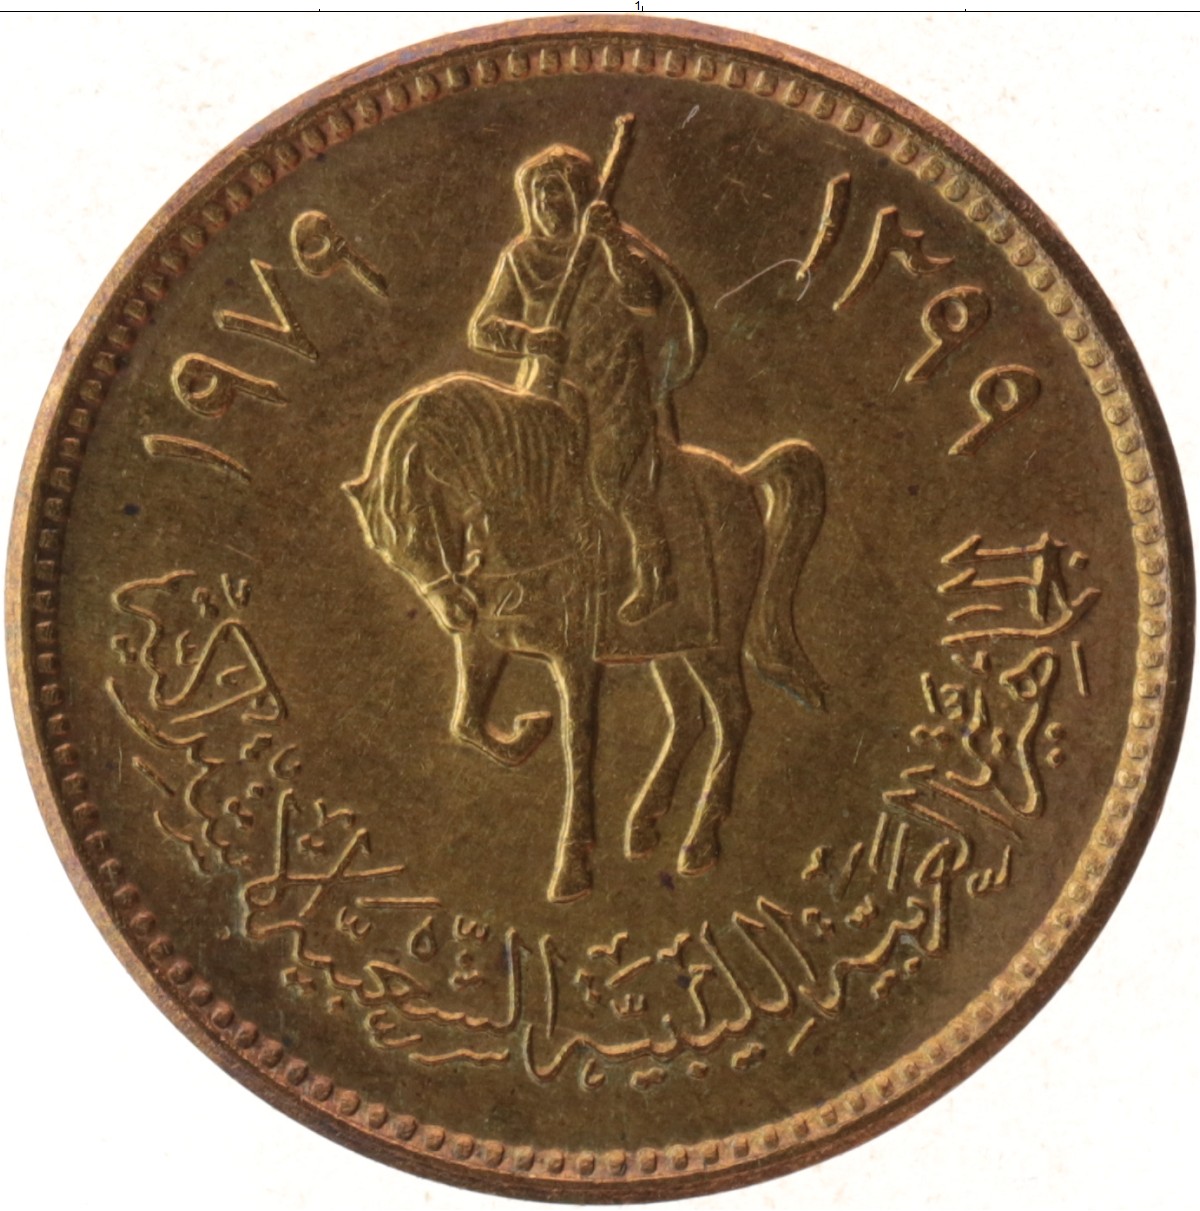 День дирхам. Монета 20 дирхам 1979 Ливия. Монеты Ливия. Libya монеты. 50 Дирхам монета.